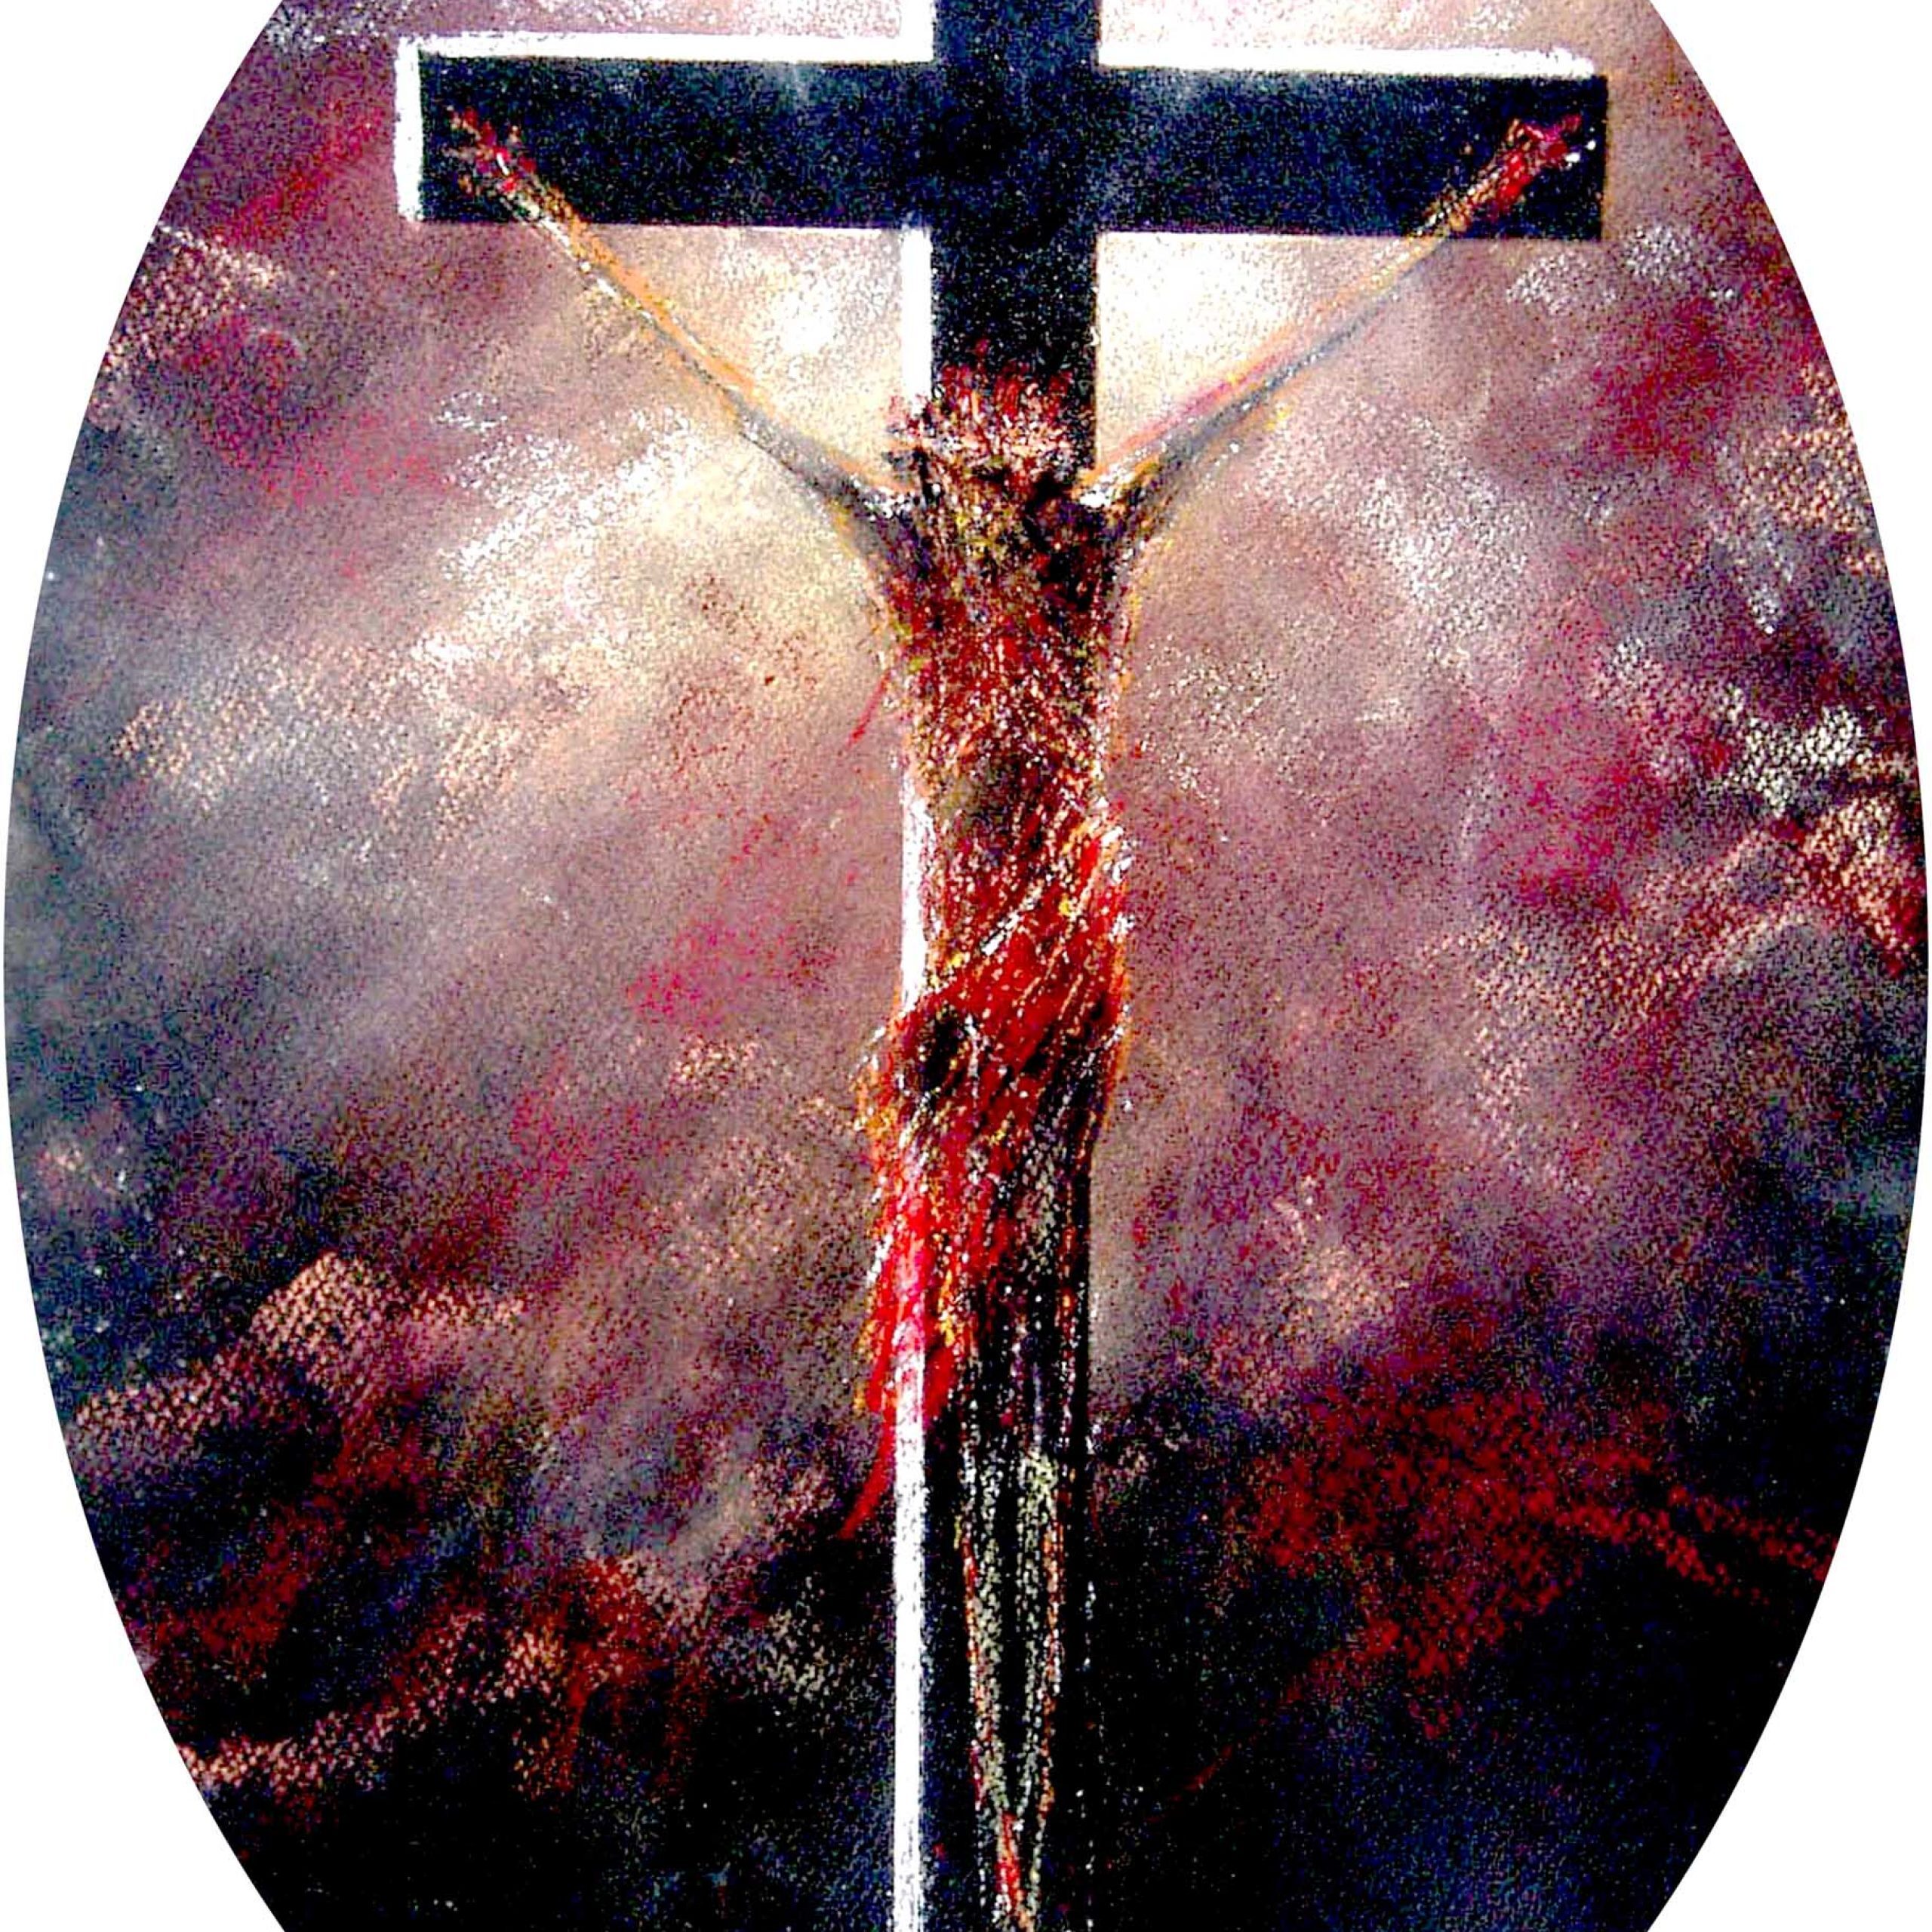 Isus umire na križu